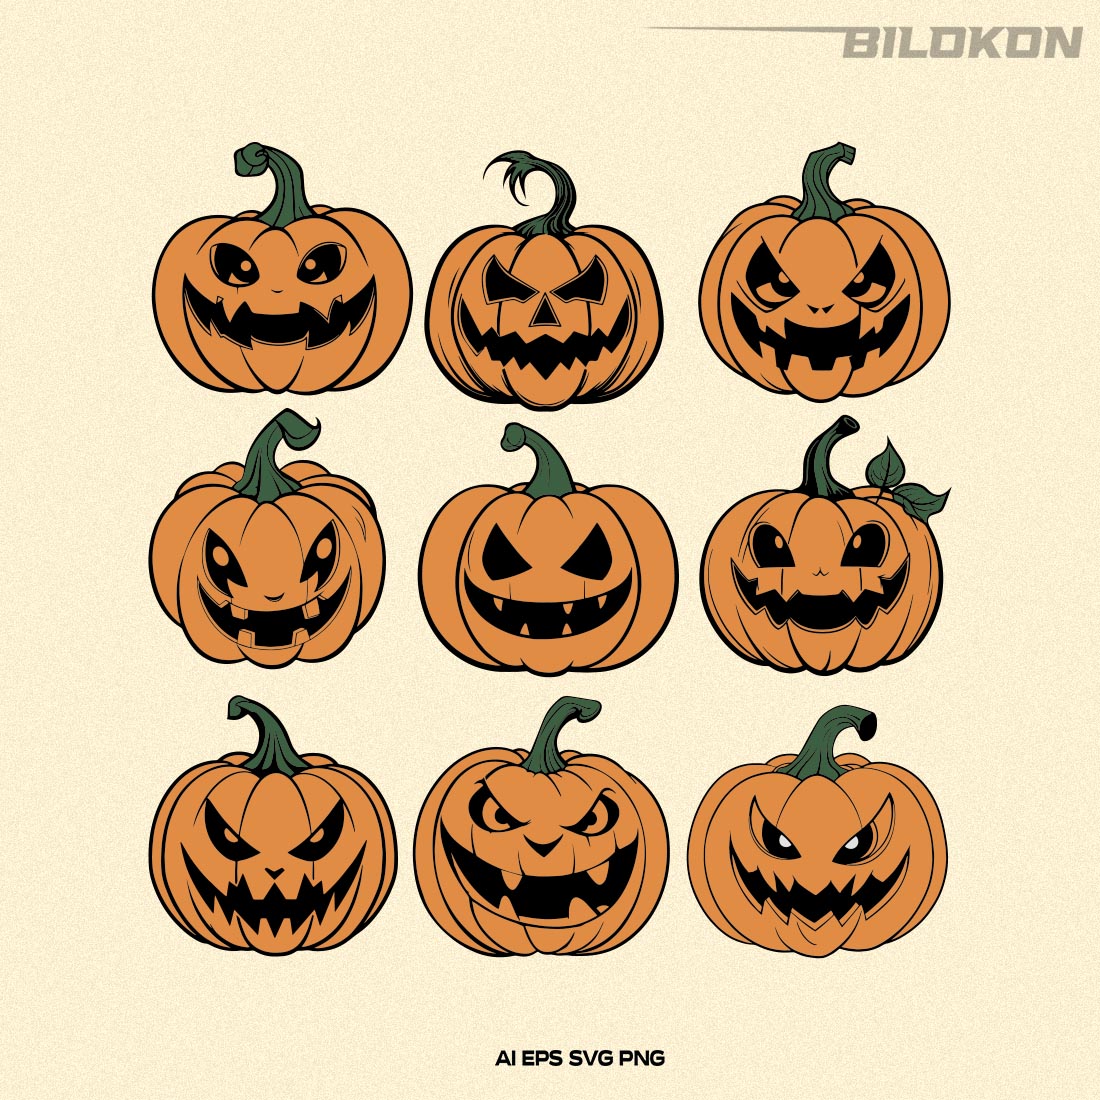 Funny Halloween Pumpkin SVG, Halloween Pumpkin Design preview image.